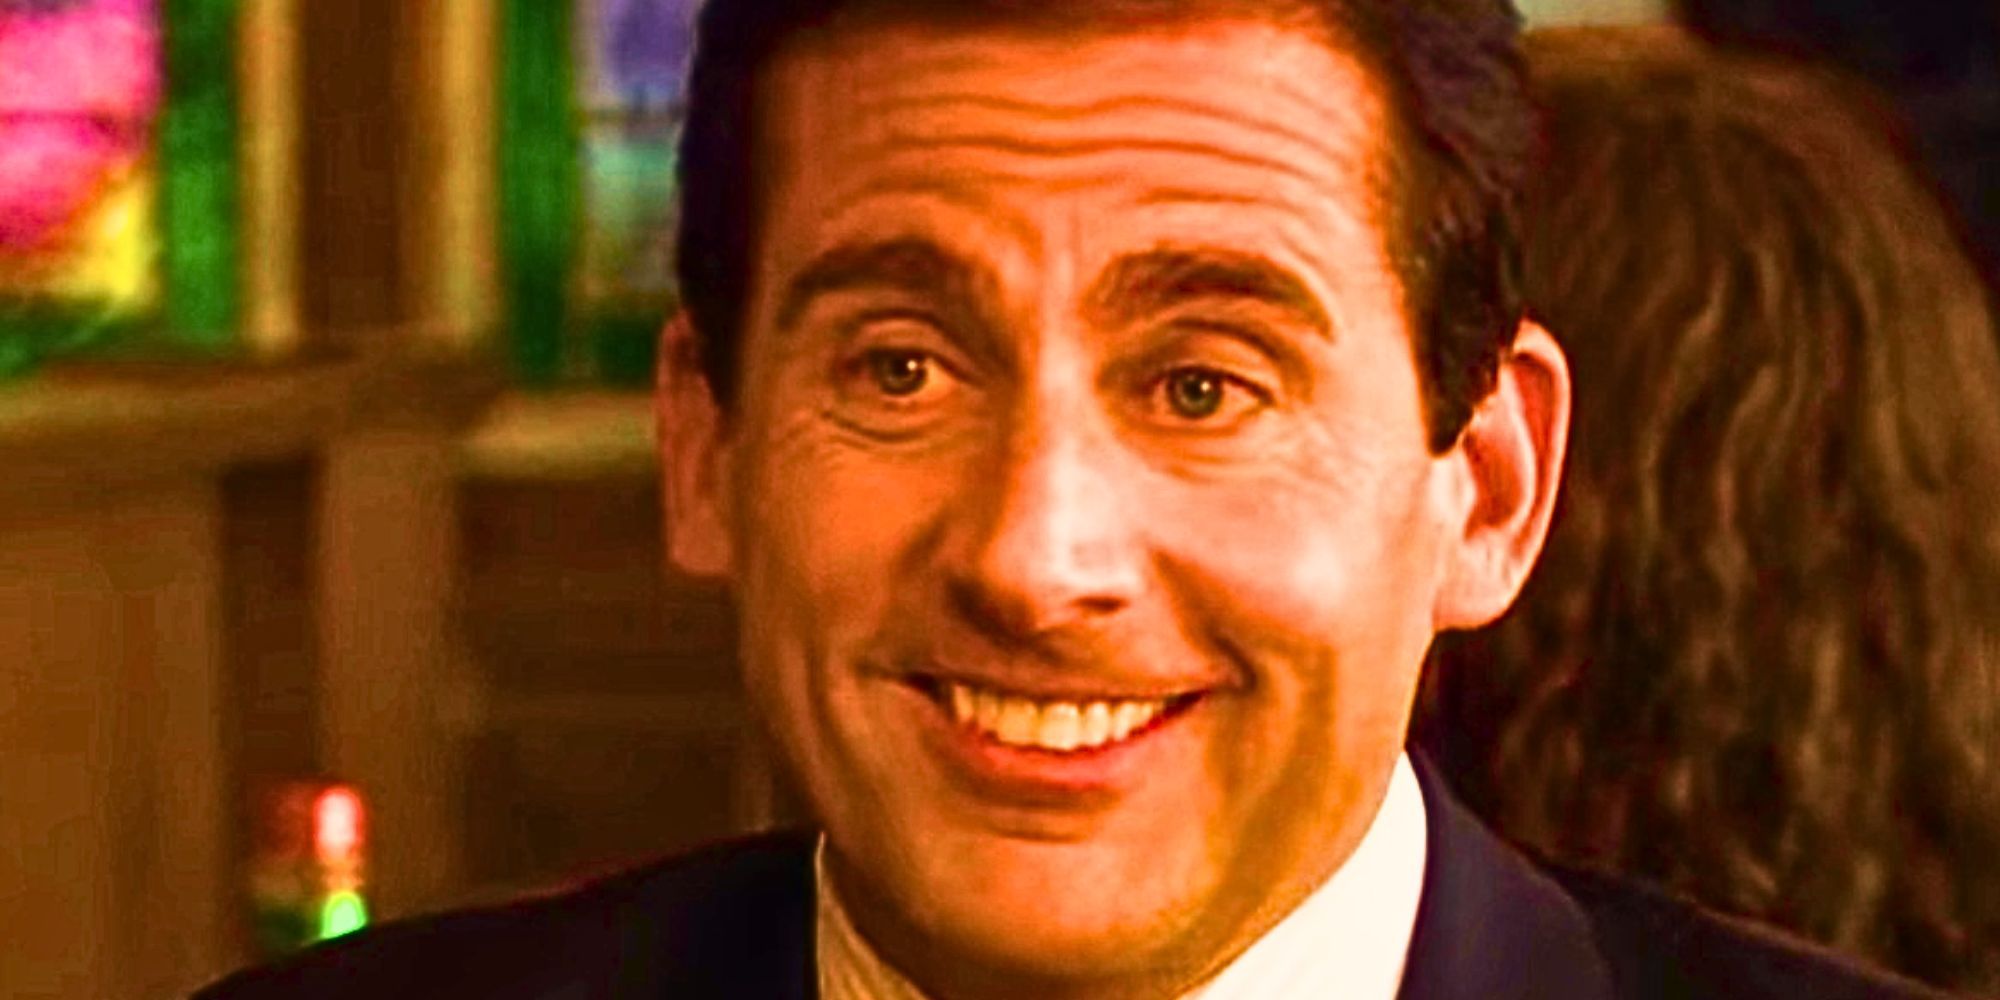 Steve Carell smiling as Michael Scott in The Office